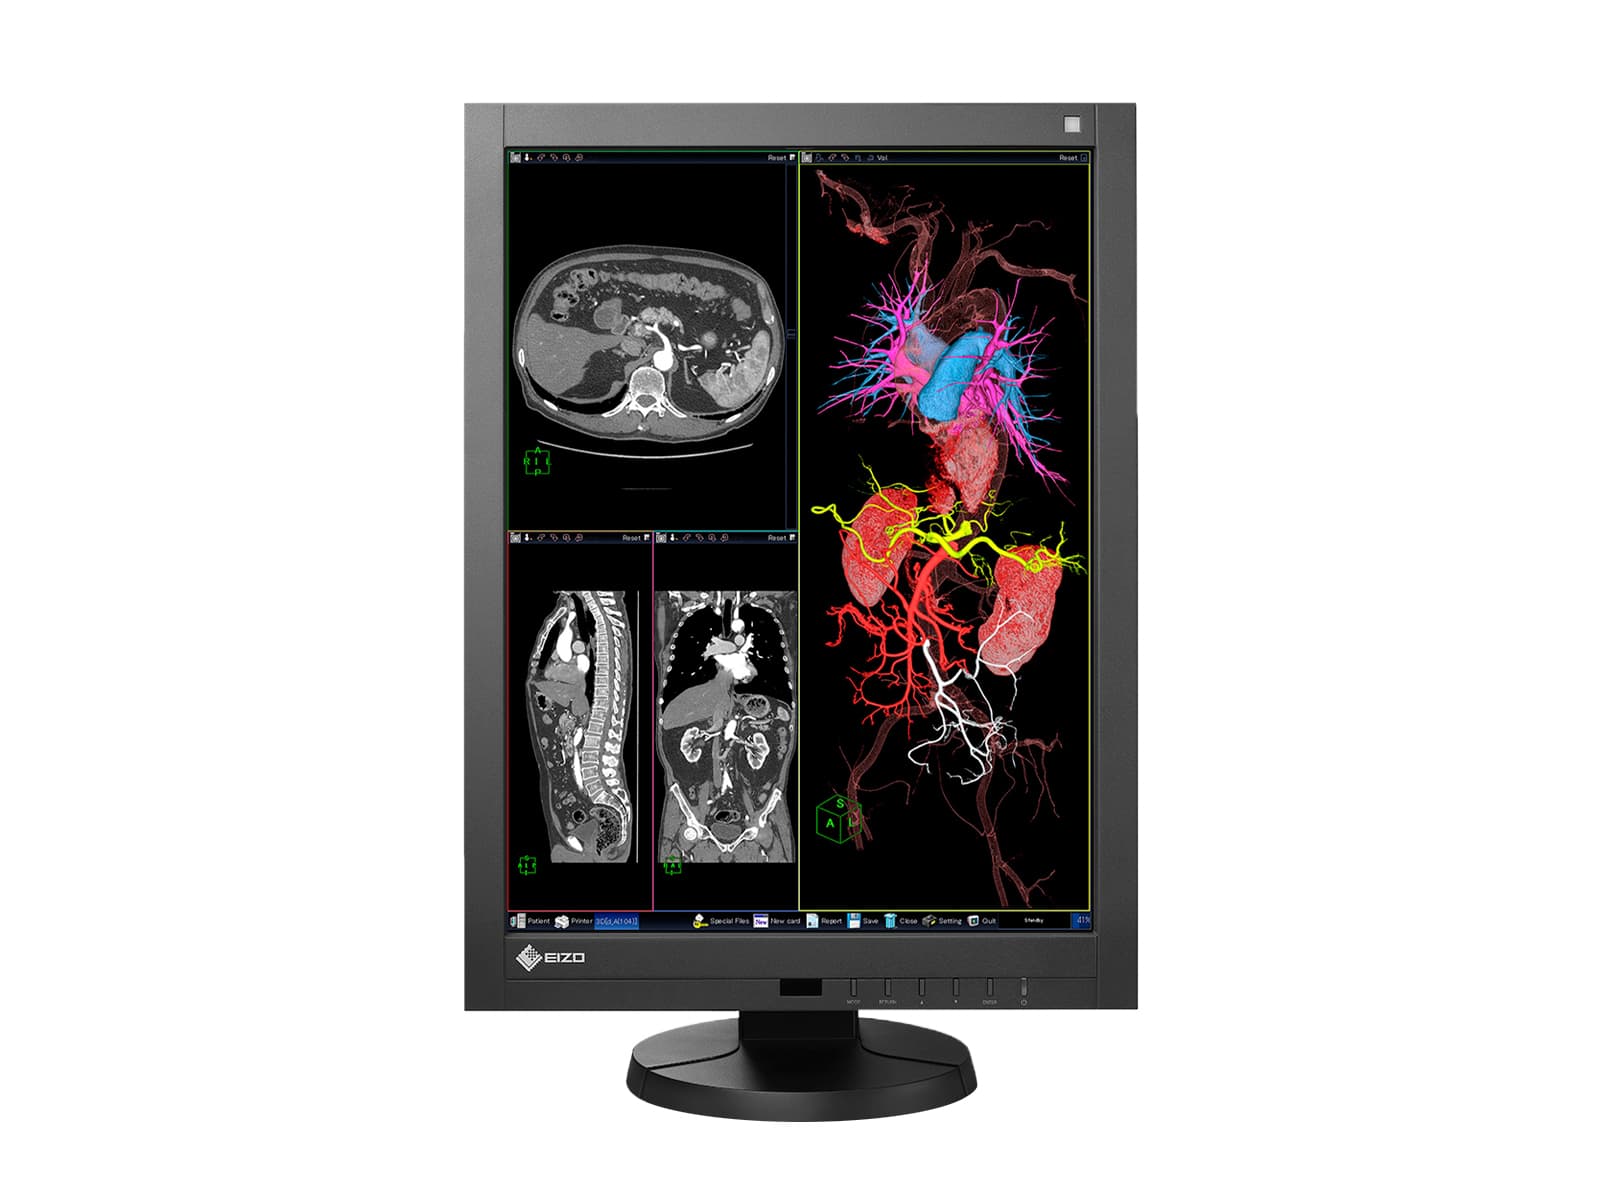 Eizo Radiforce RX240 2MP 21" Color LED General Radiology Diagnostic PACS Display (RX240)